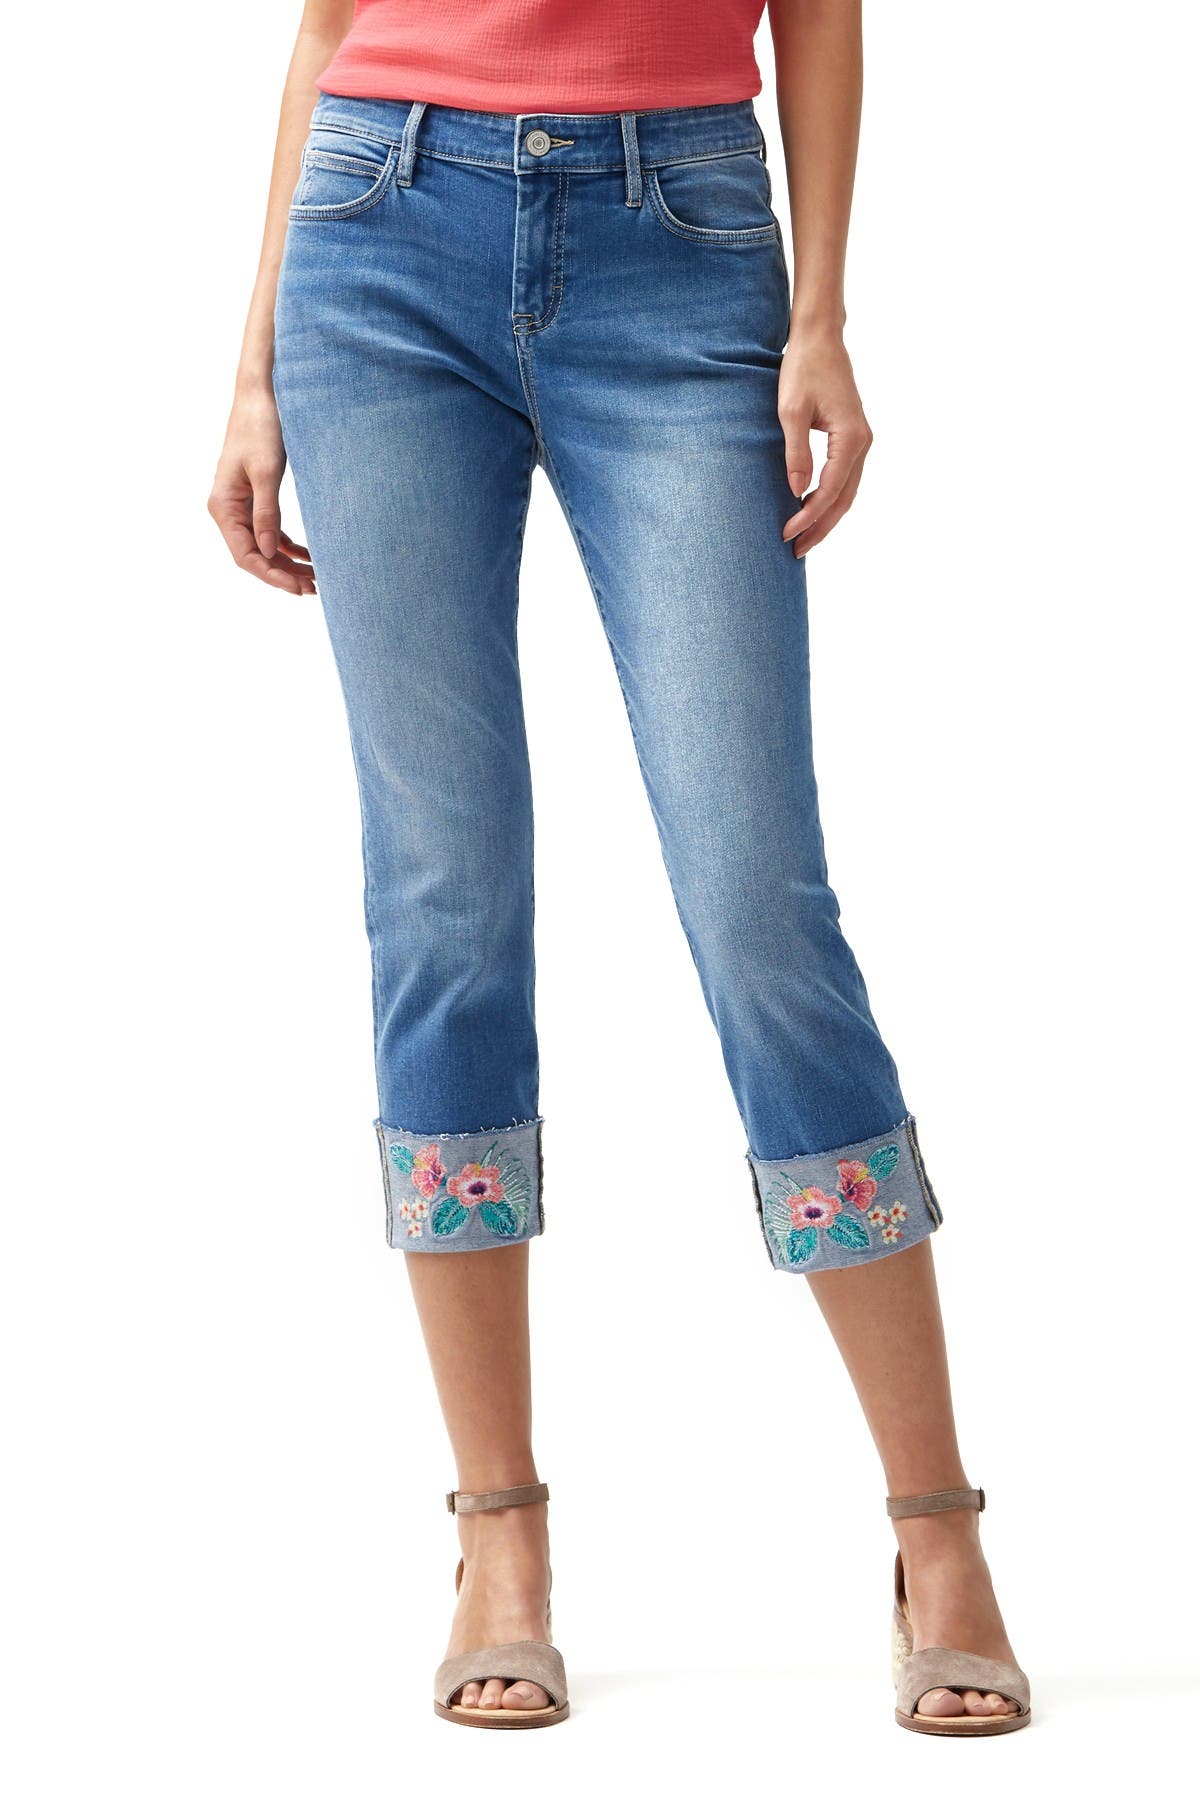 tommy bahama womens jeans